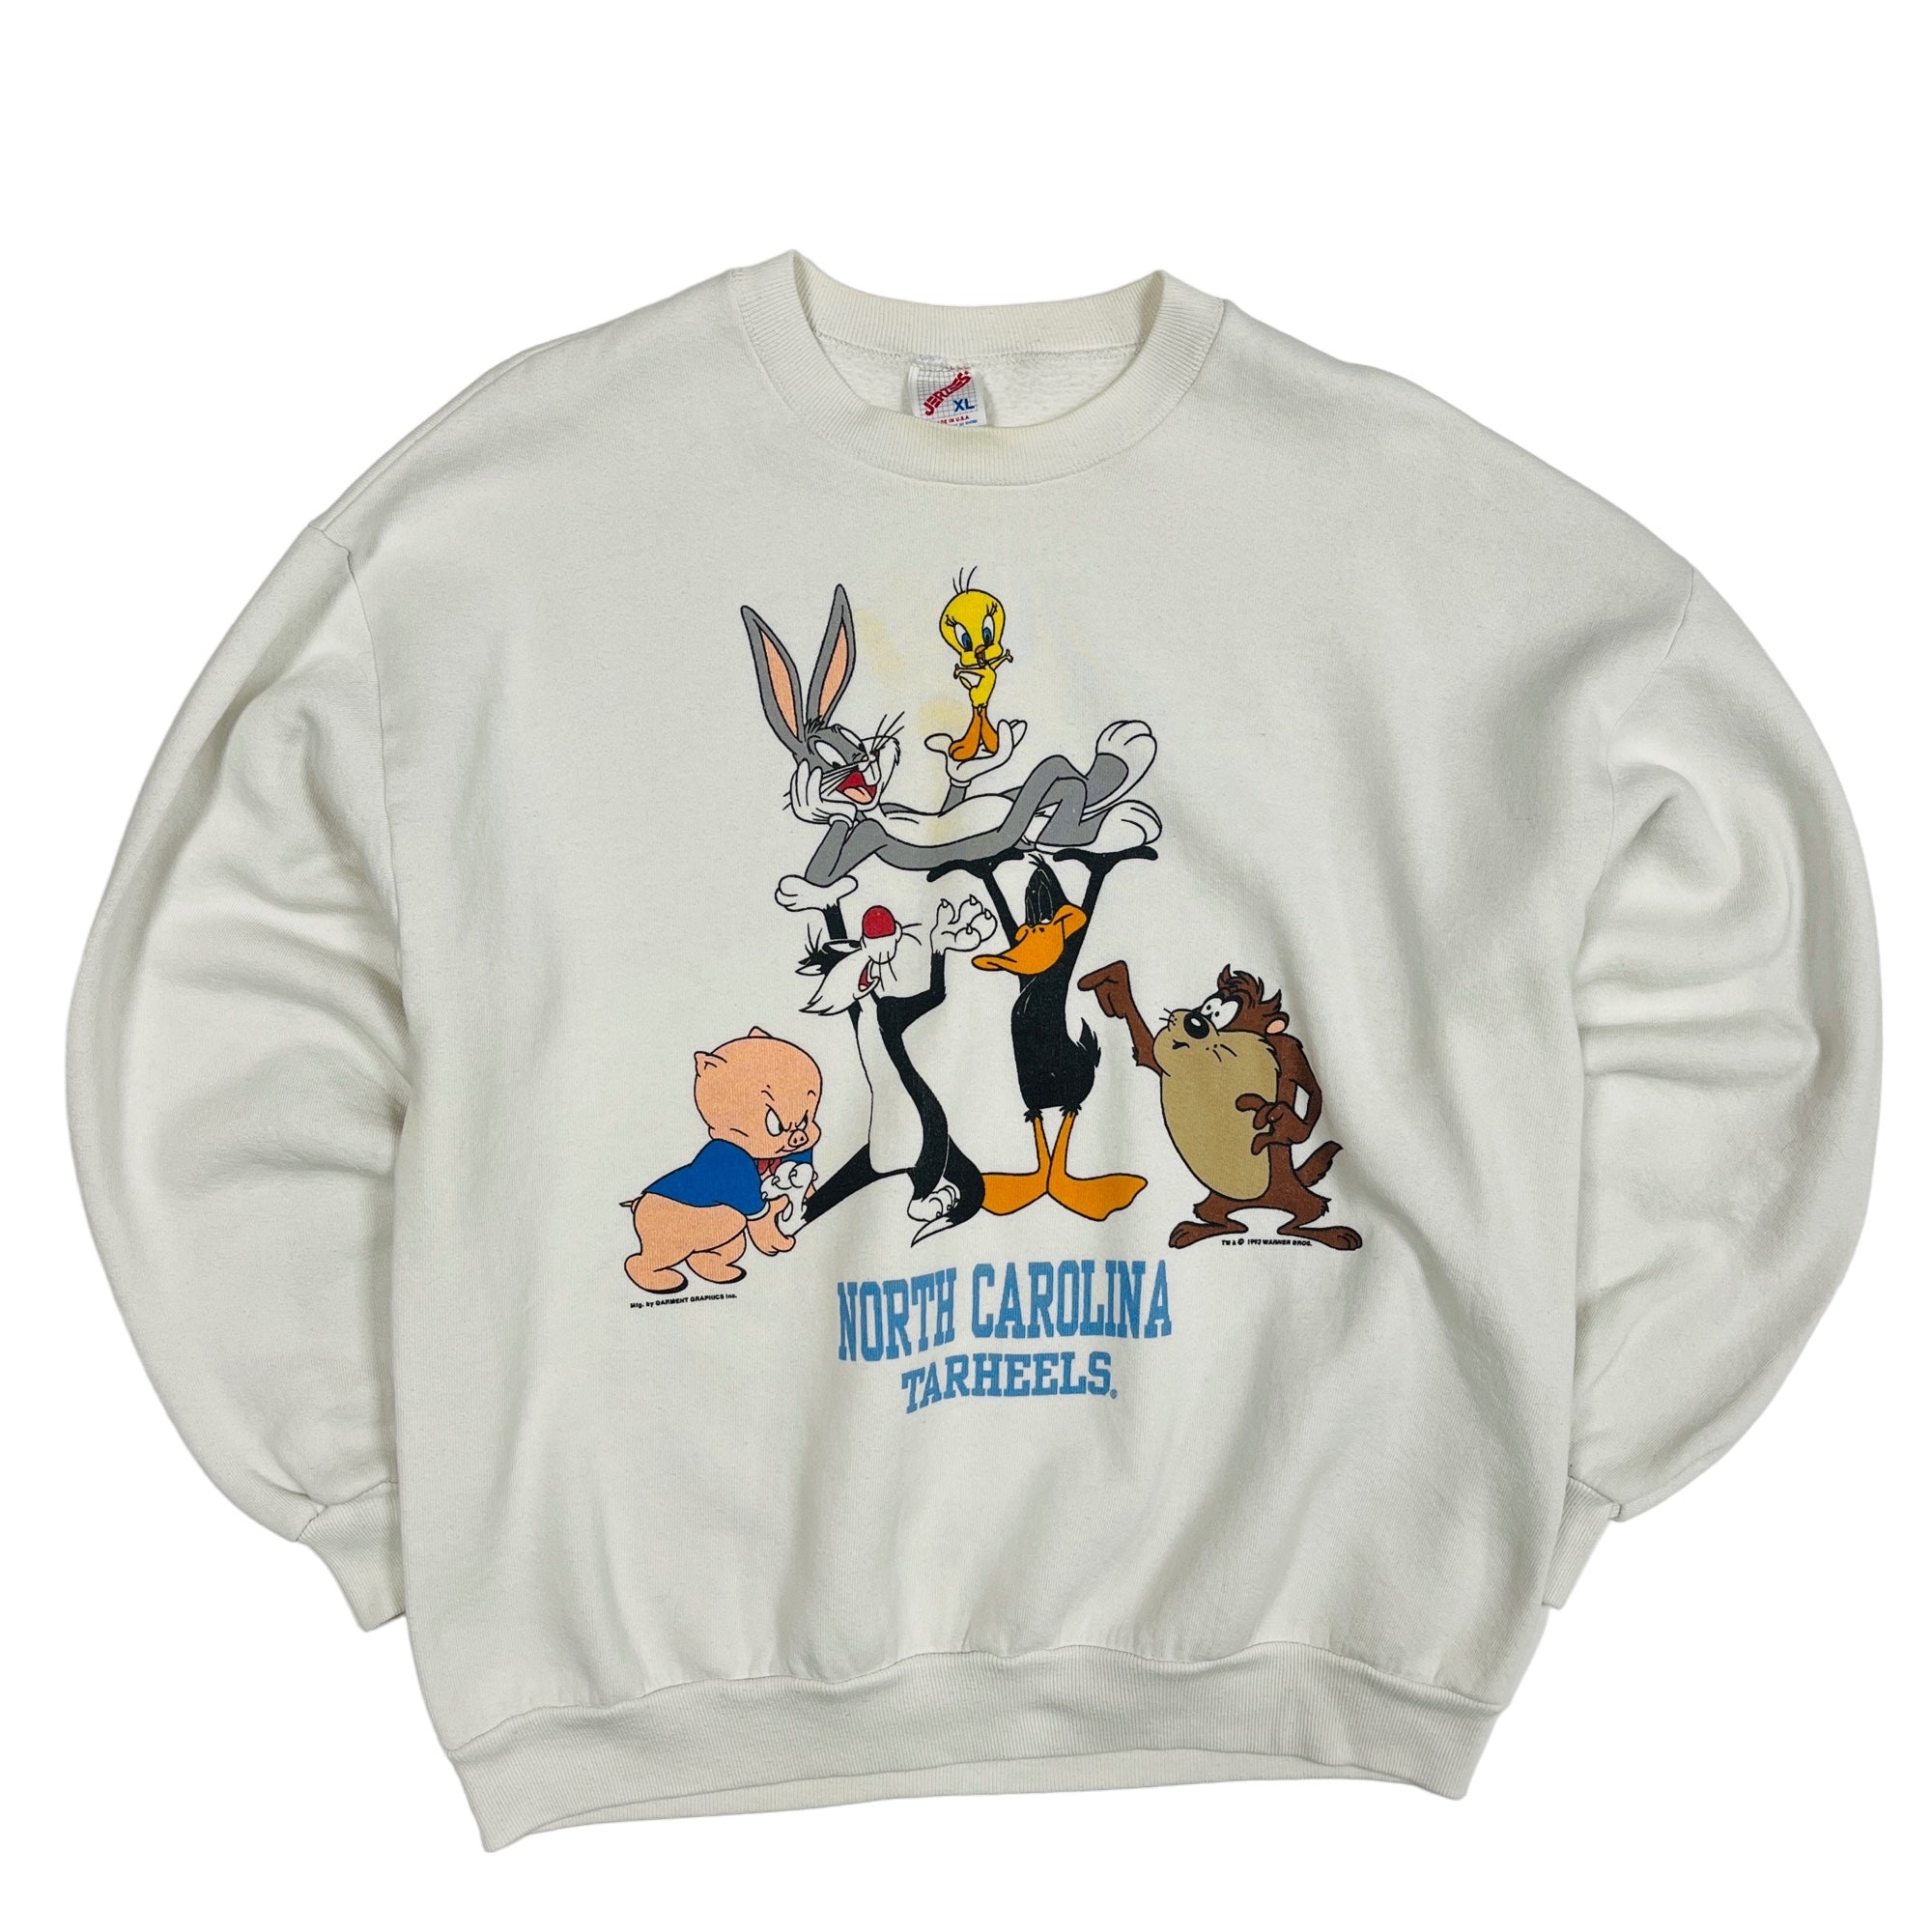 90's Looney Tunes x North Carolina Tarheels Graphic Sweatshirt - Large